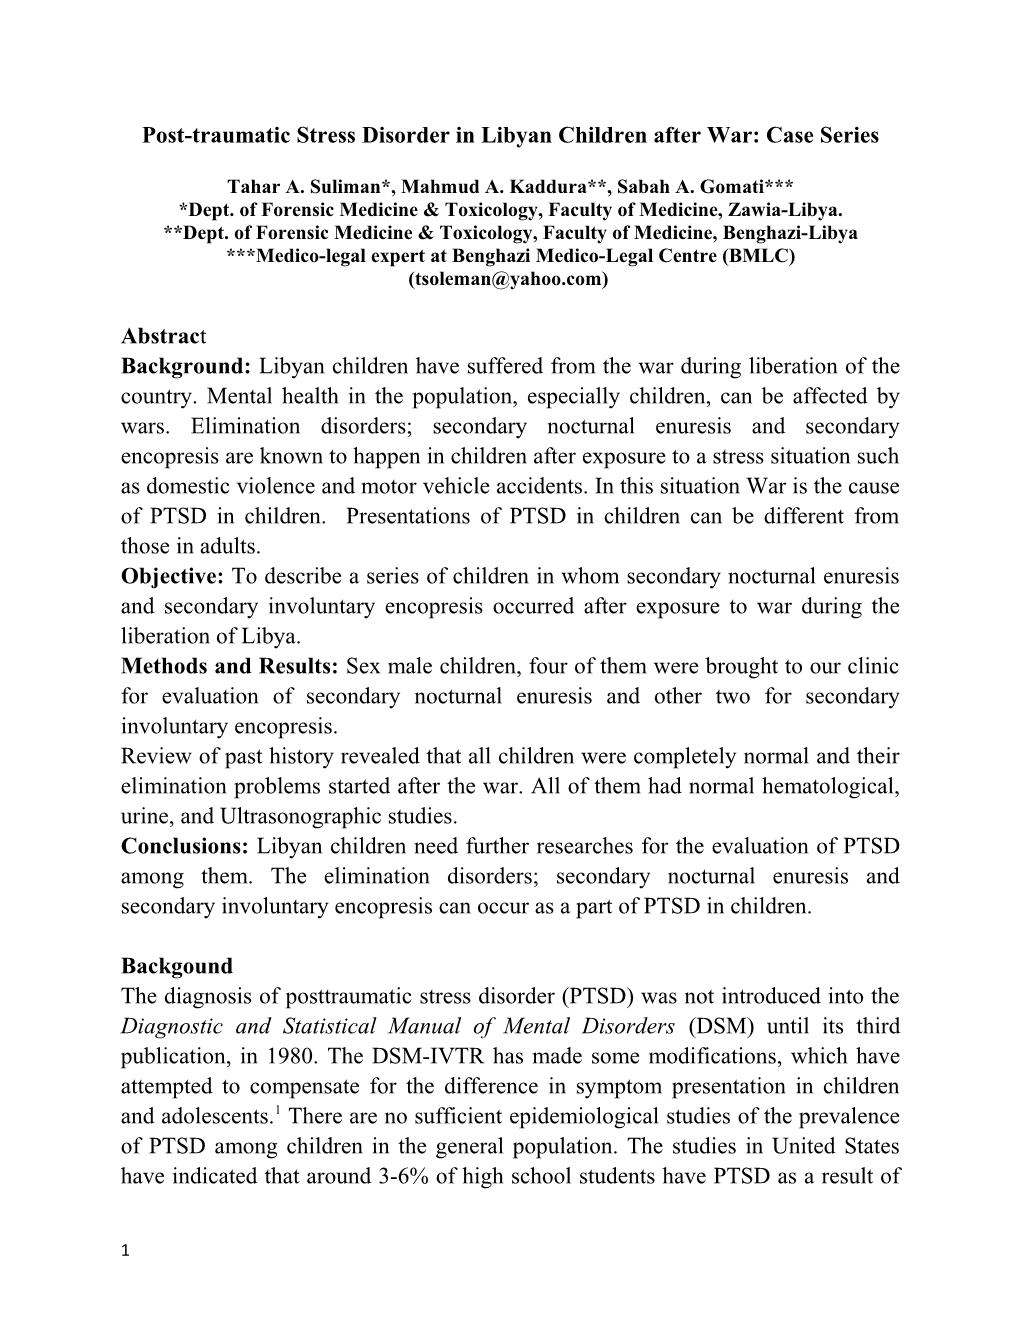 Post-Traumatic Stress Disorder in Libyan Children After War: Case Series